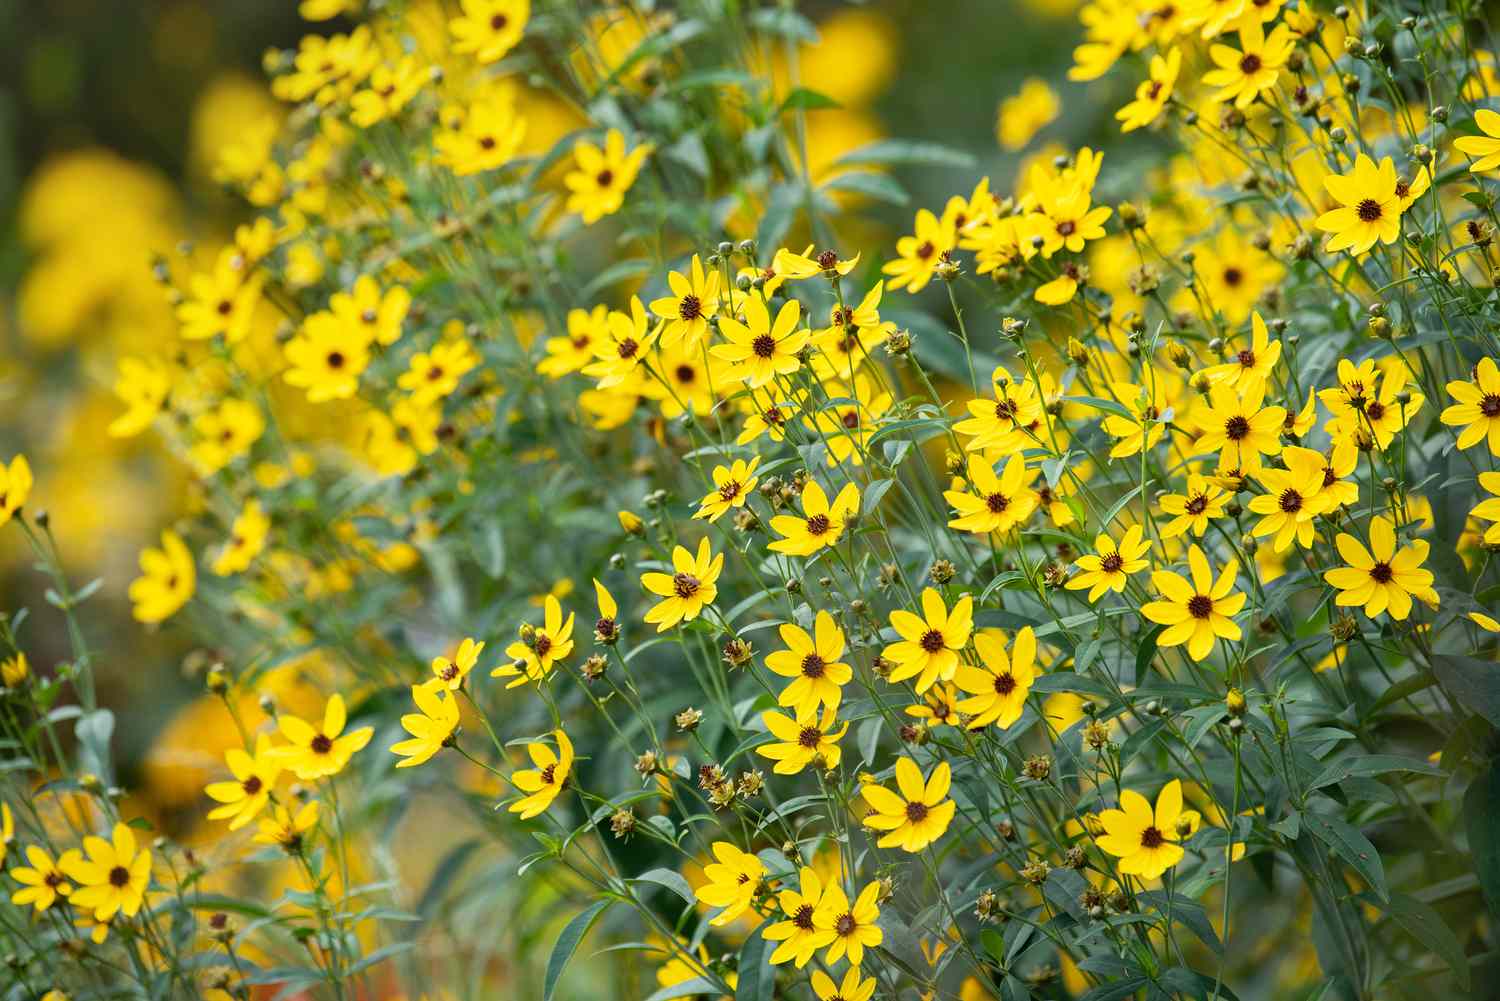 Zeckensamenpflanze mit kleinen gelben Blüten an dünnen Stielen